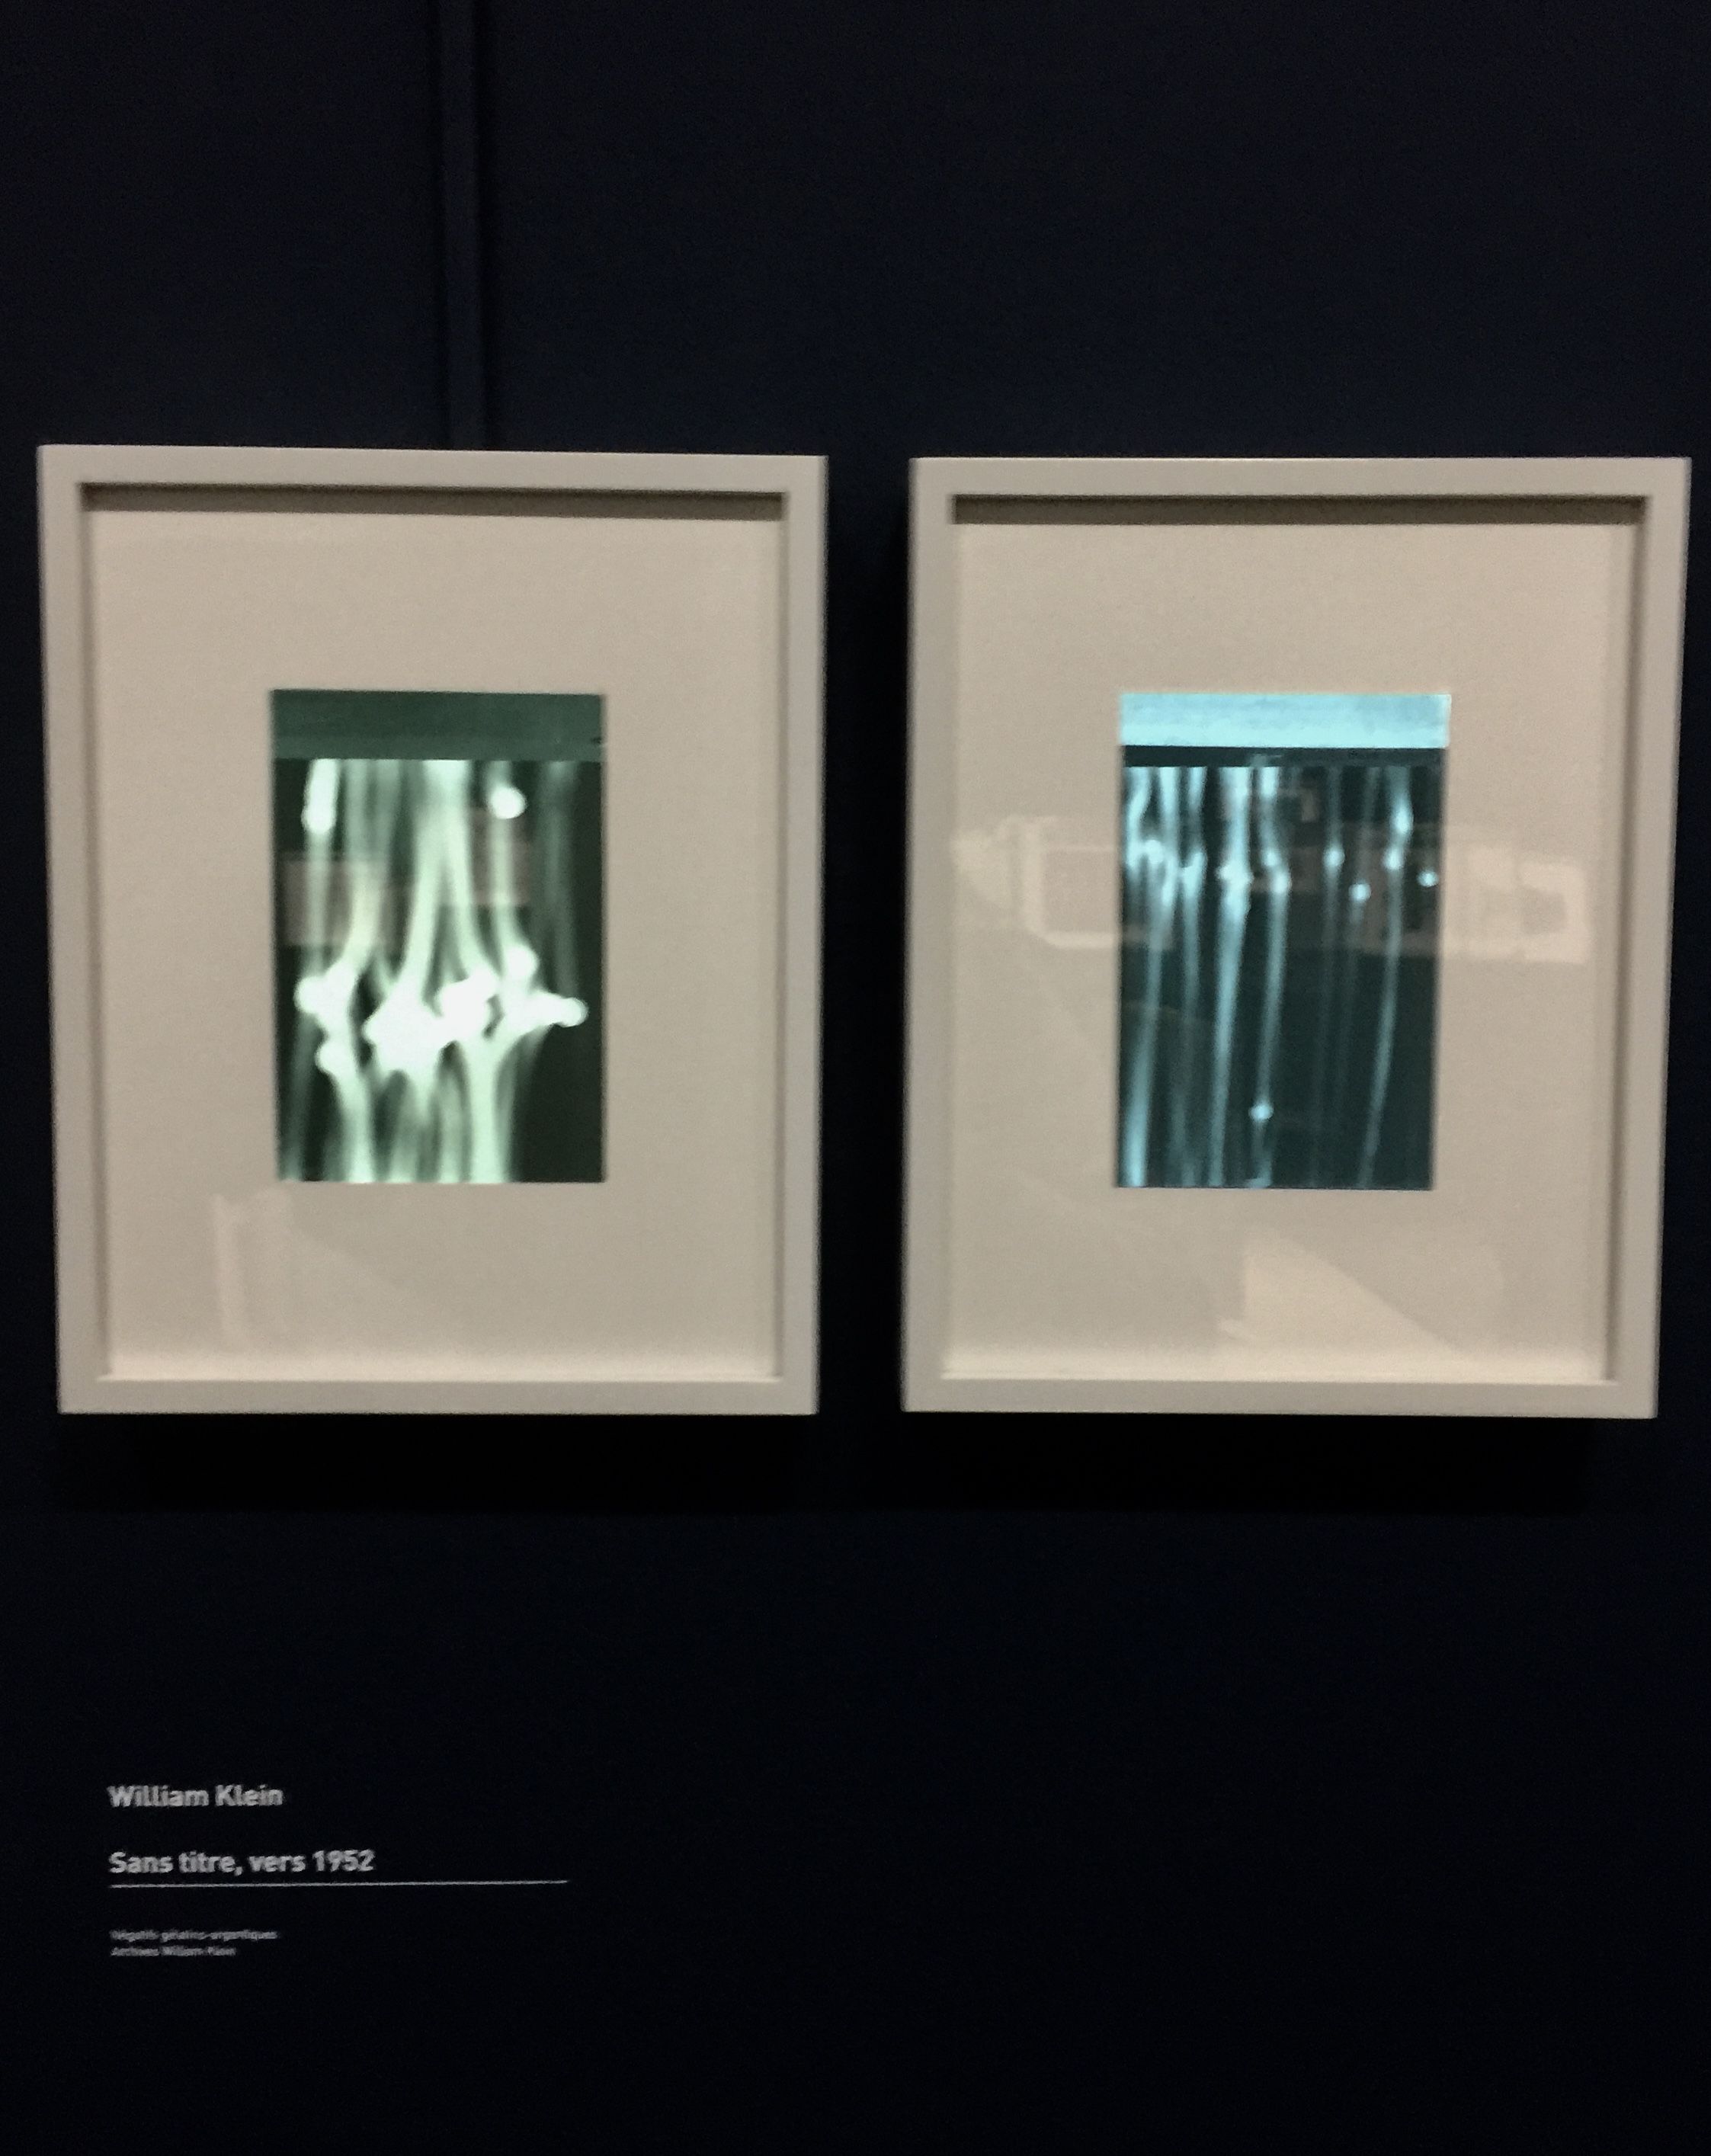 Photographisme, Klein, Ifert, Zamecznik, Exhibition, Georges Pompidou Centre, Paris, November 8 - January 29 2018, copyright, di